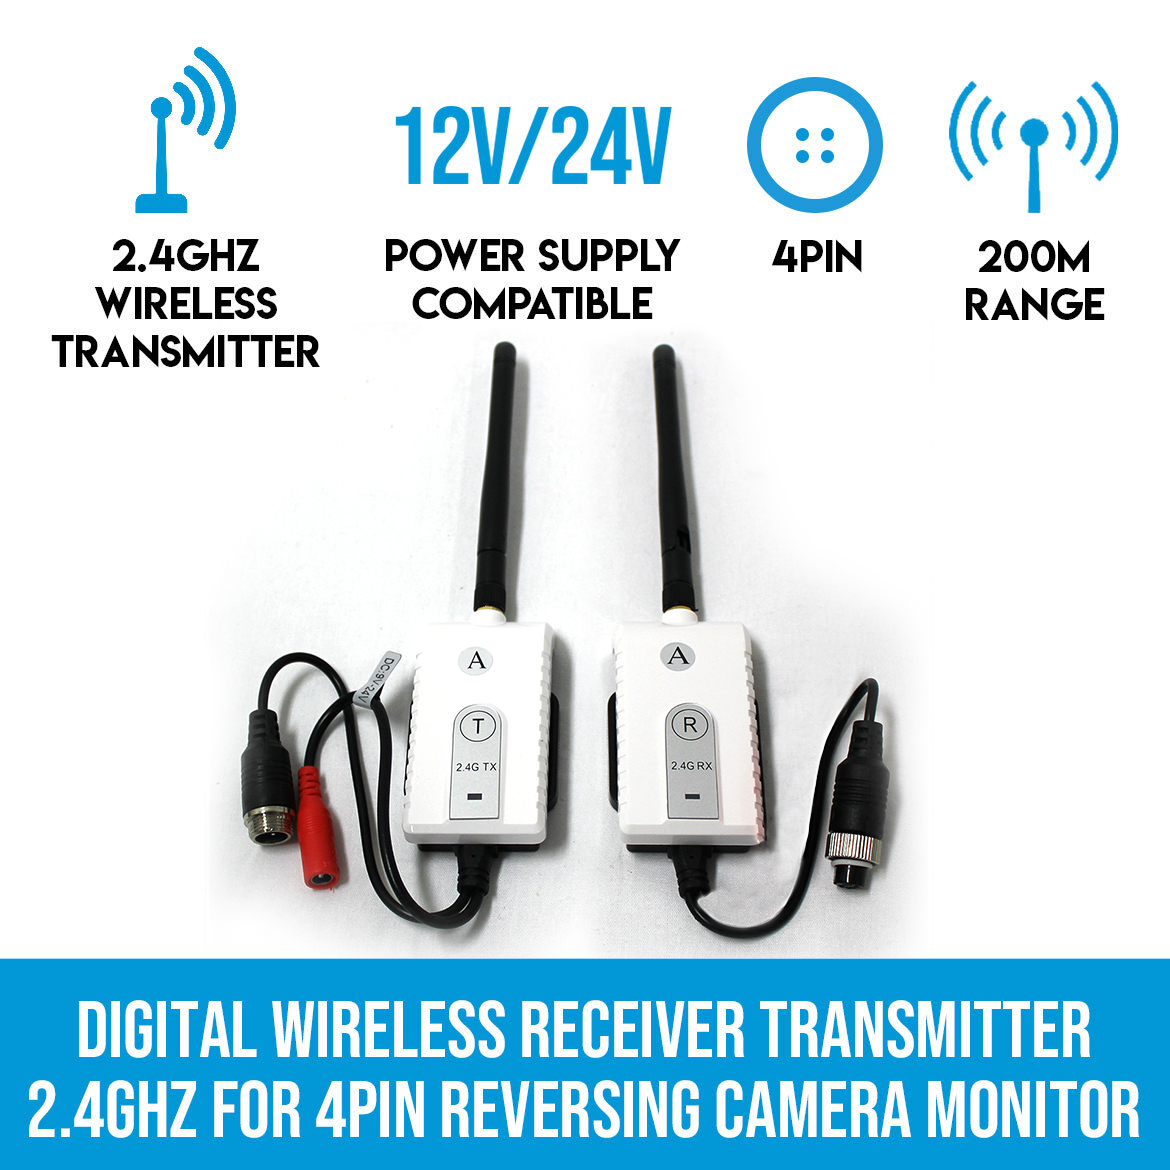 Elinz Digital Wireless Receiver Transmitter 2.4GHz For 4PIN Reversing Camera Monitor Channel 1